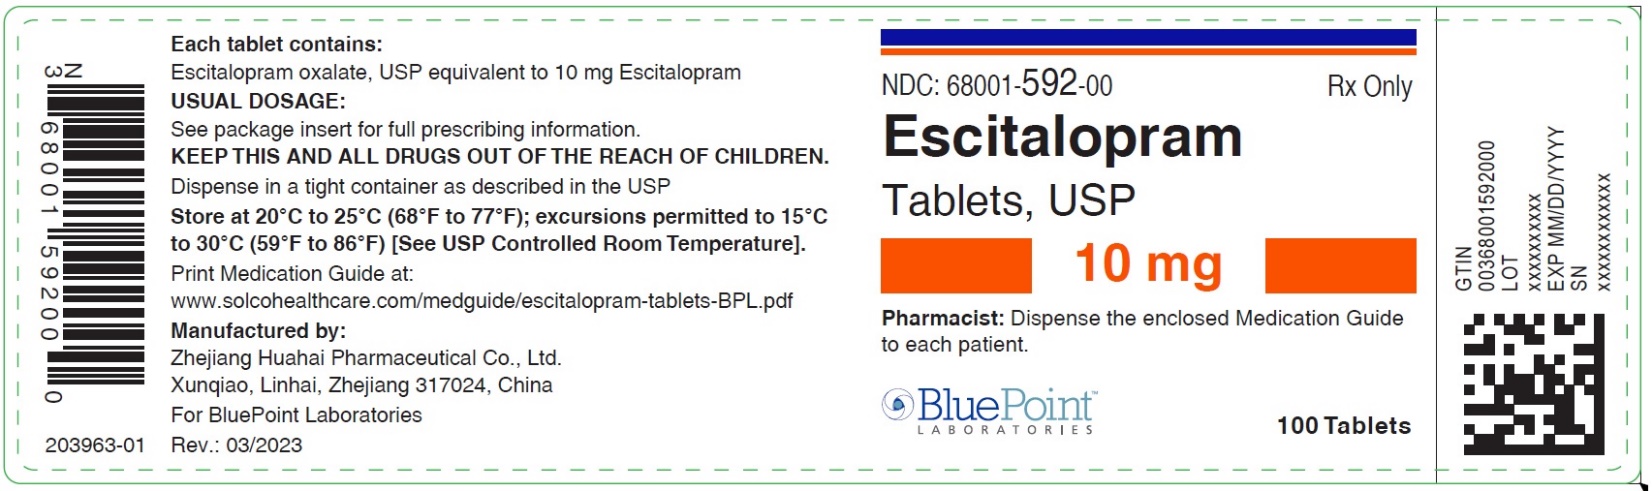 Bottle Label Escitalopram Tablets 10 mg 100 count